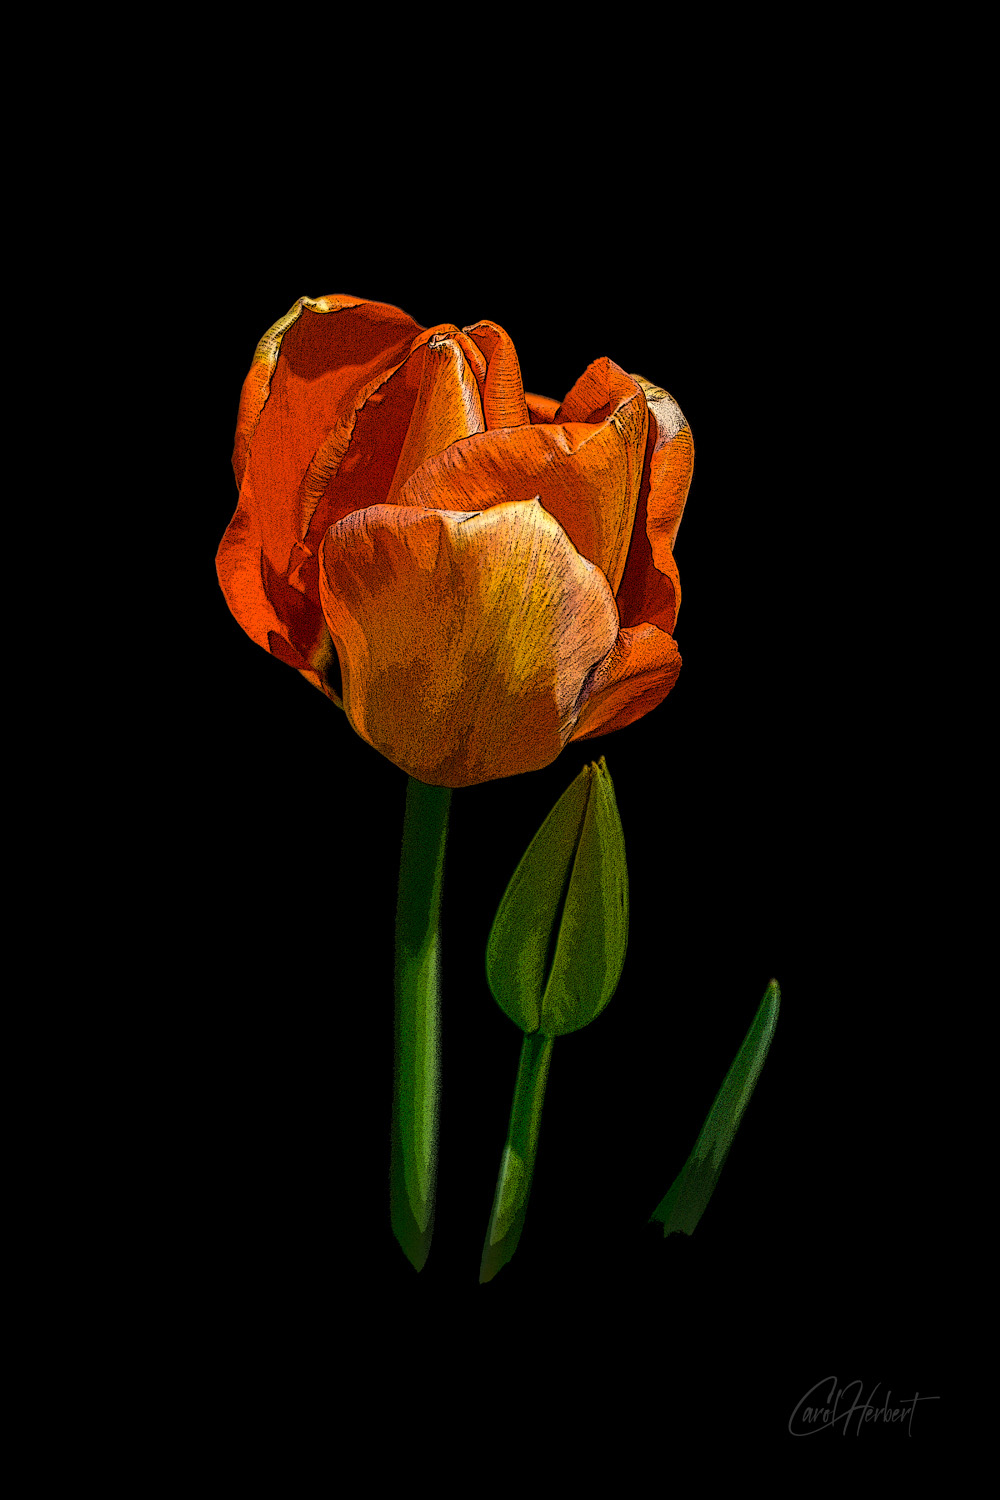 A single orange tulip on a black background in a pop art style